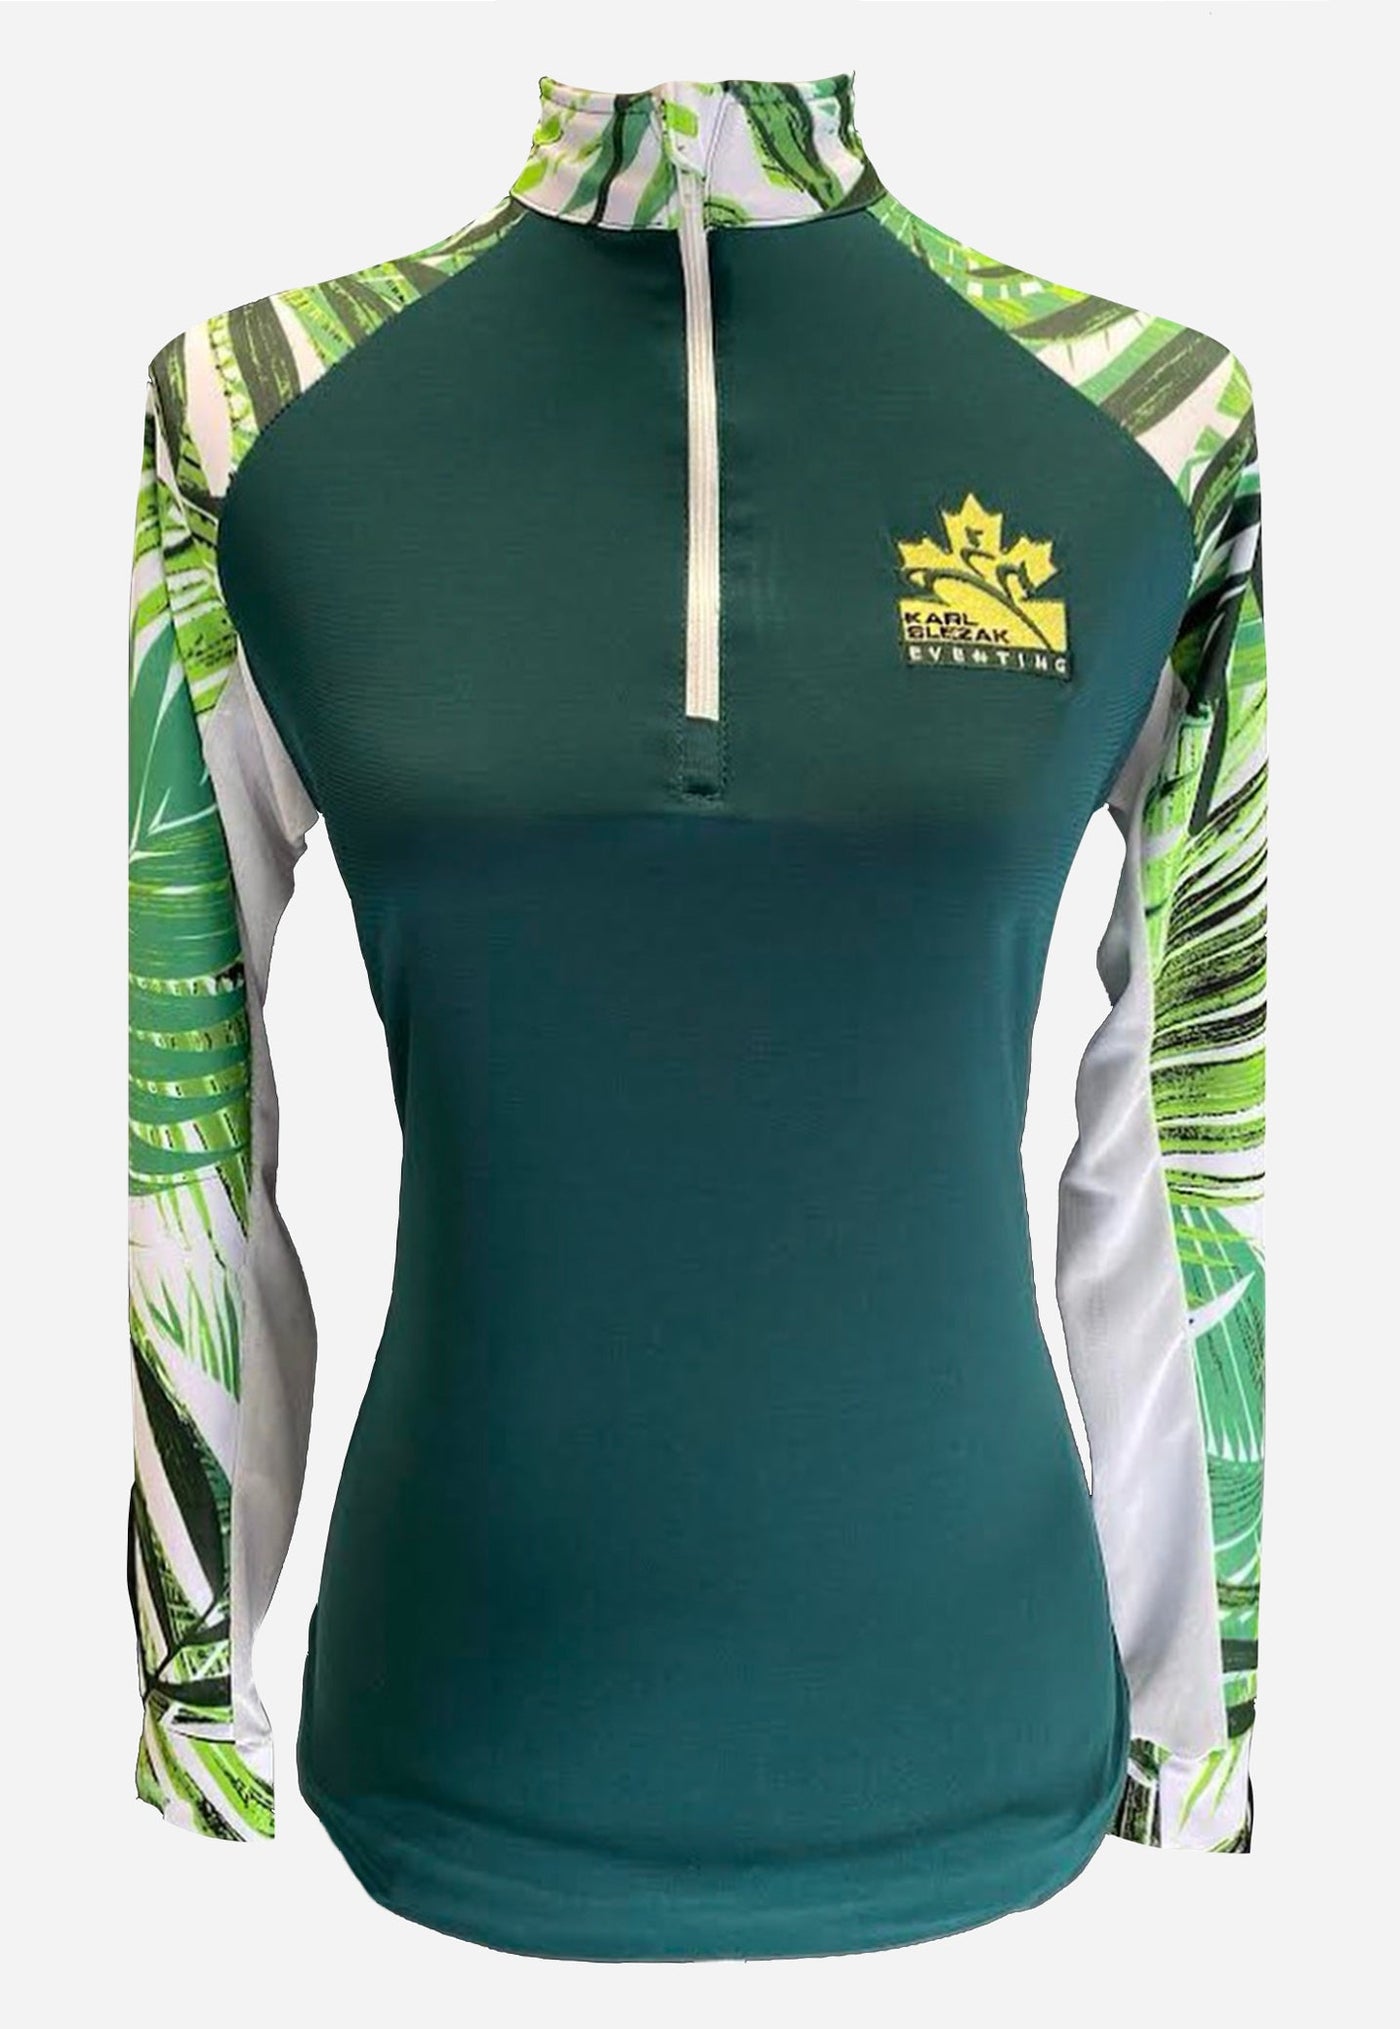 Karl Slezak Eventing Custom Sun Shirt - Hunter + Leaf Lagoon     Adult + Youth Sizes